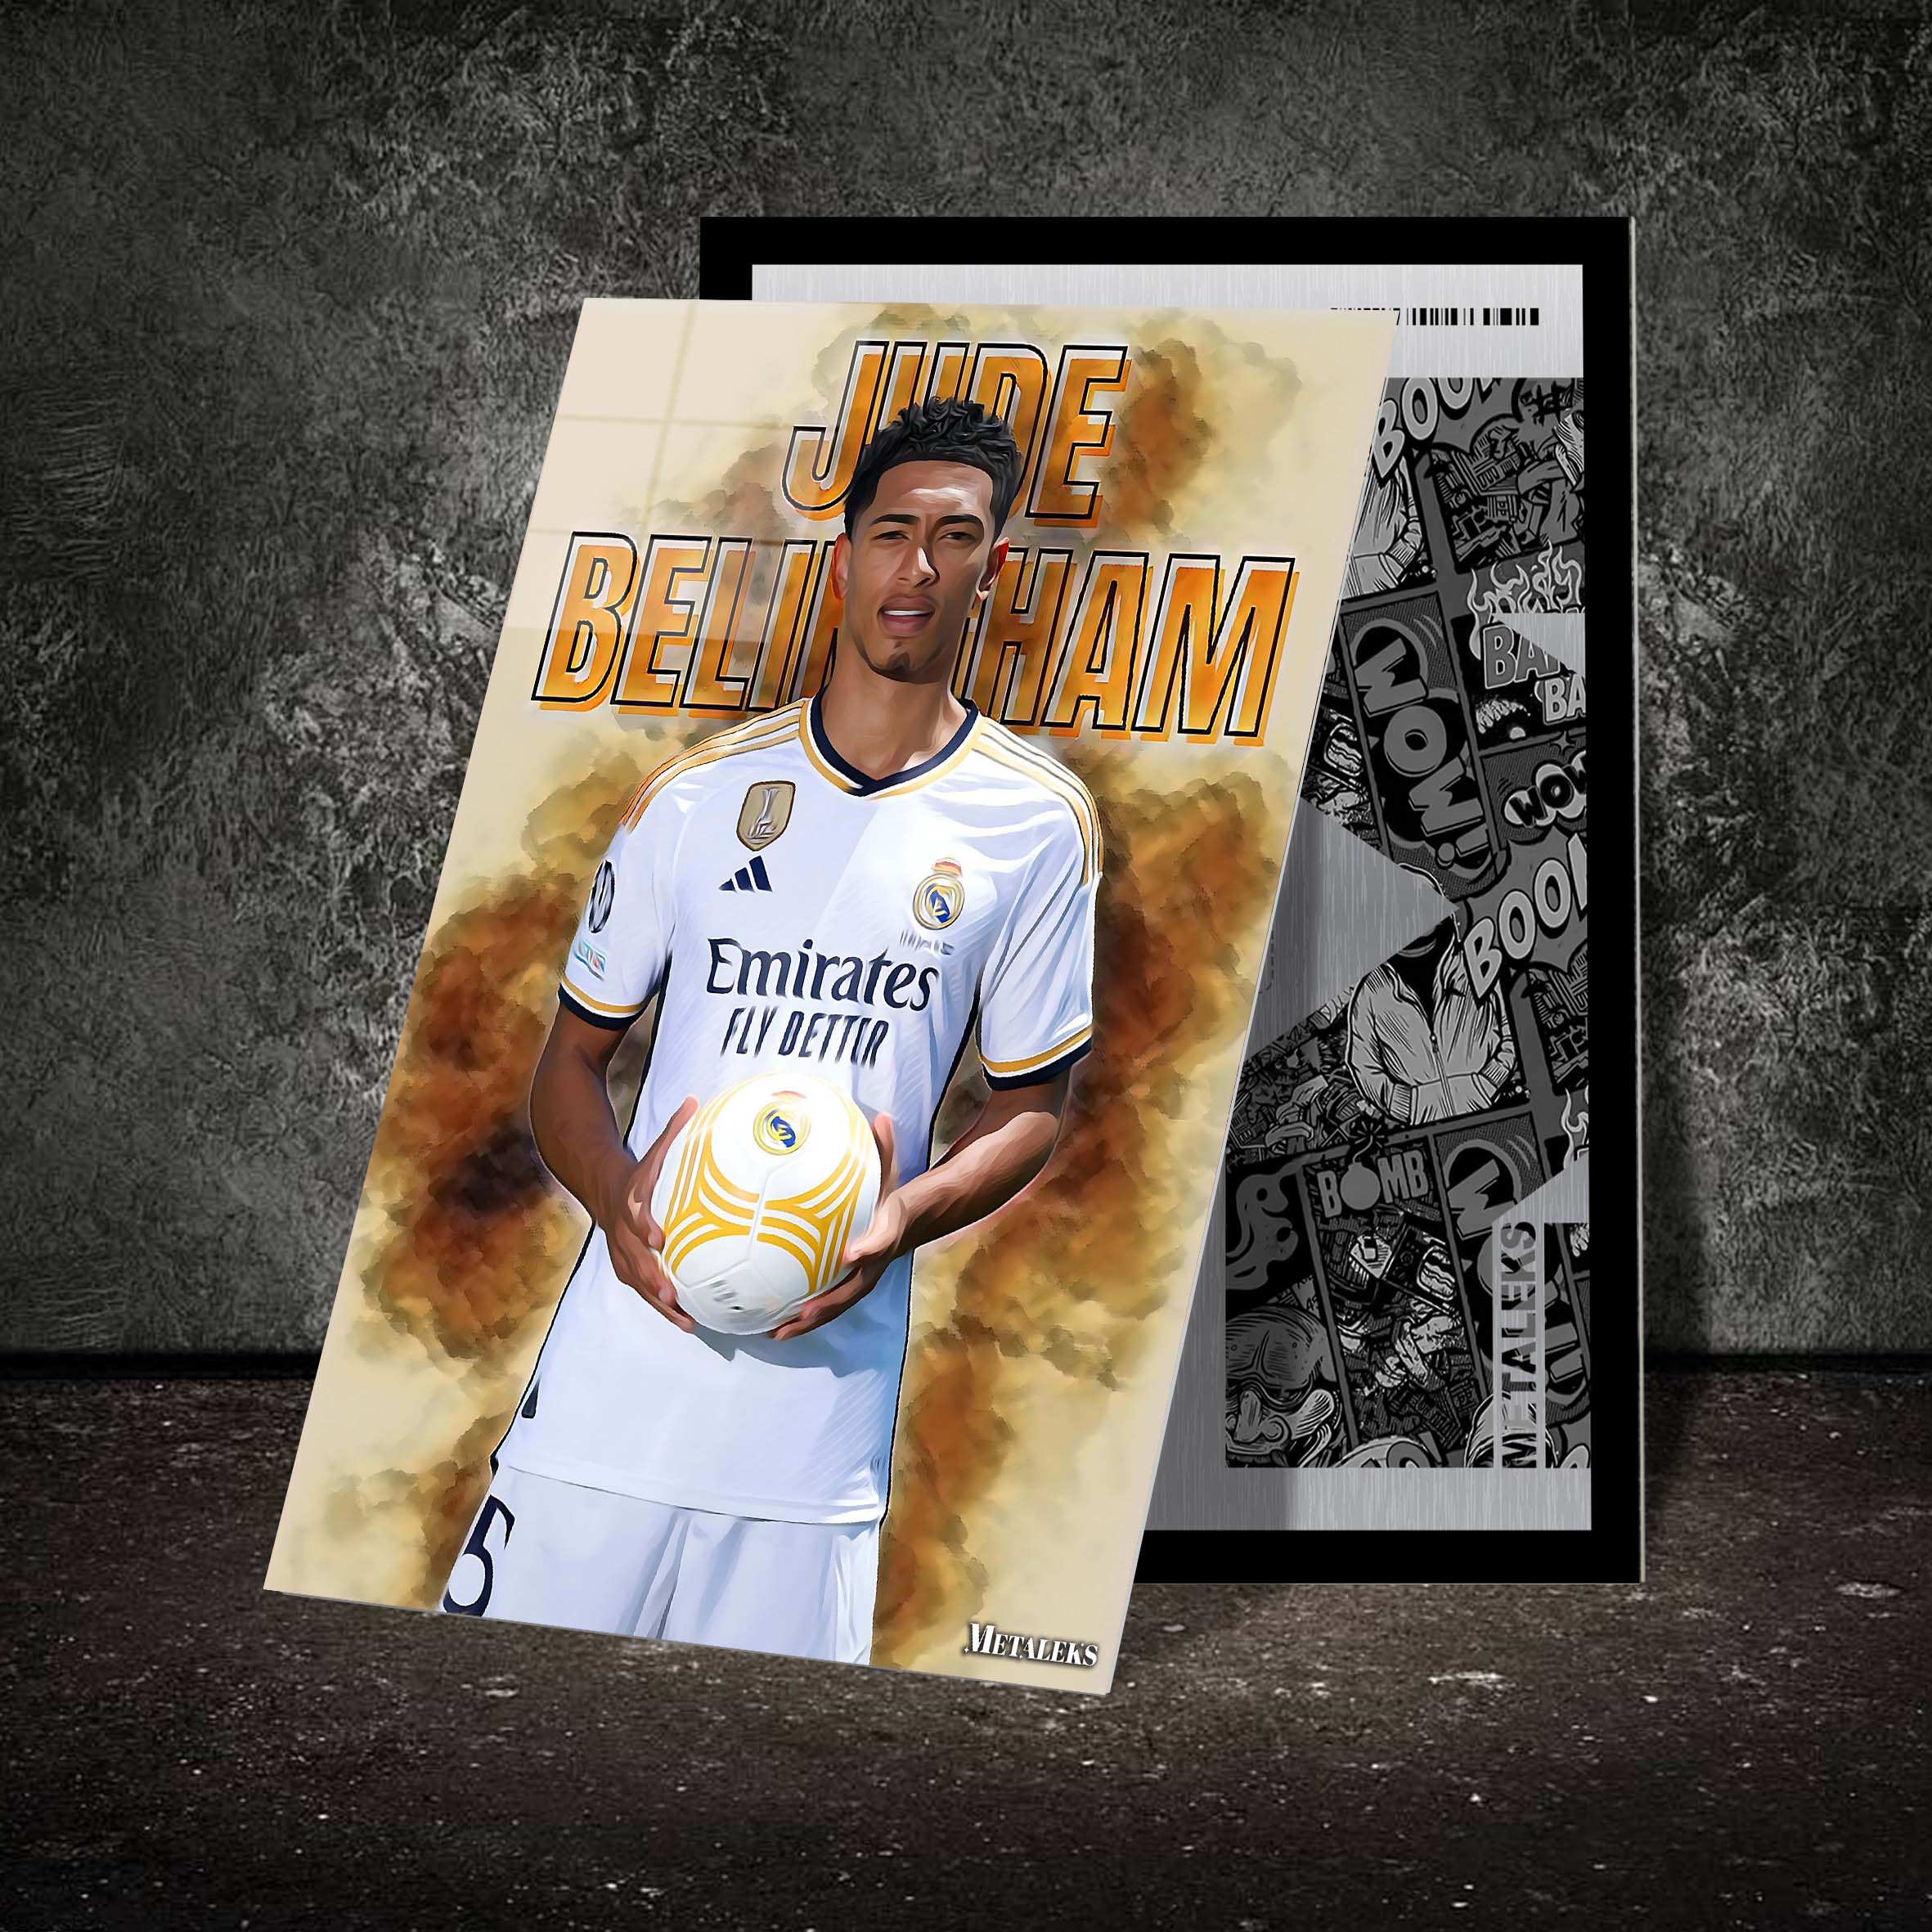 Jude Real Madrid-designed by @Wijaki Thaisusuken